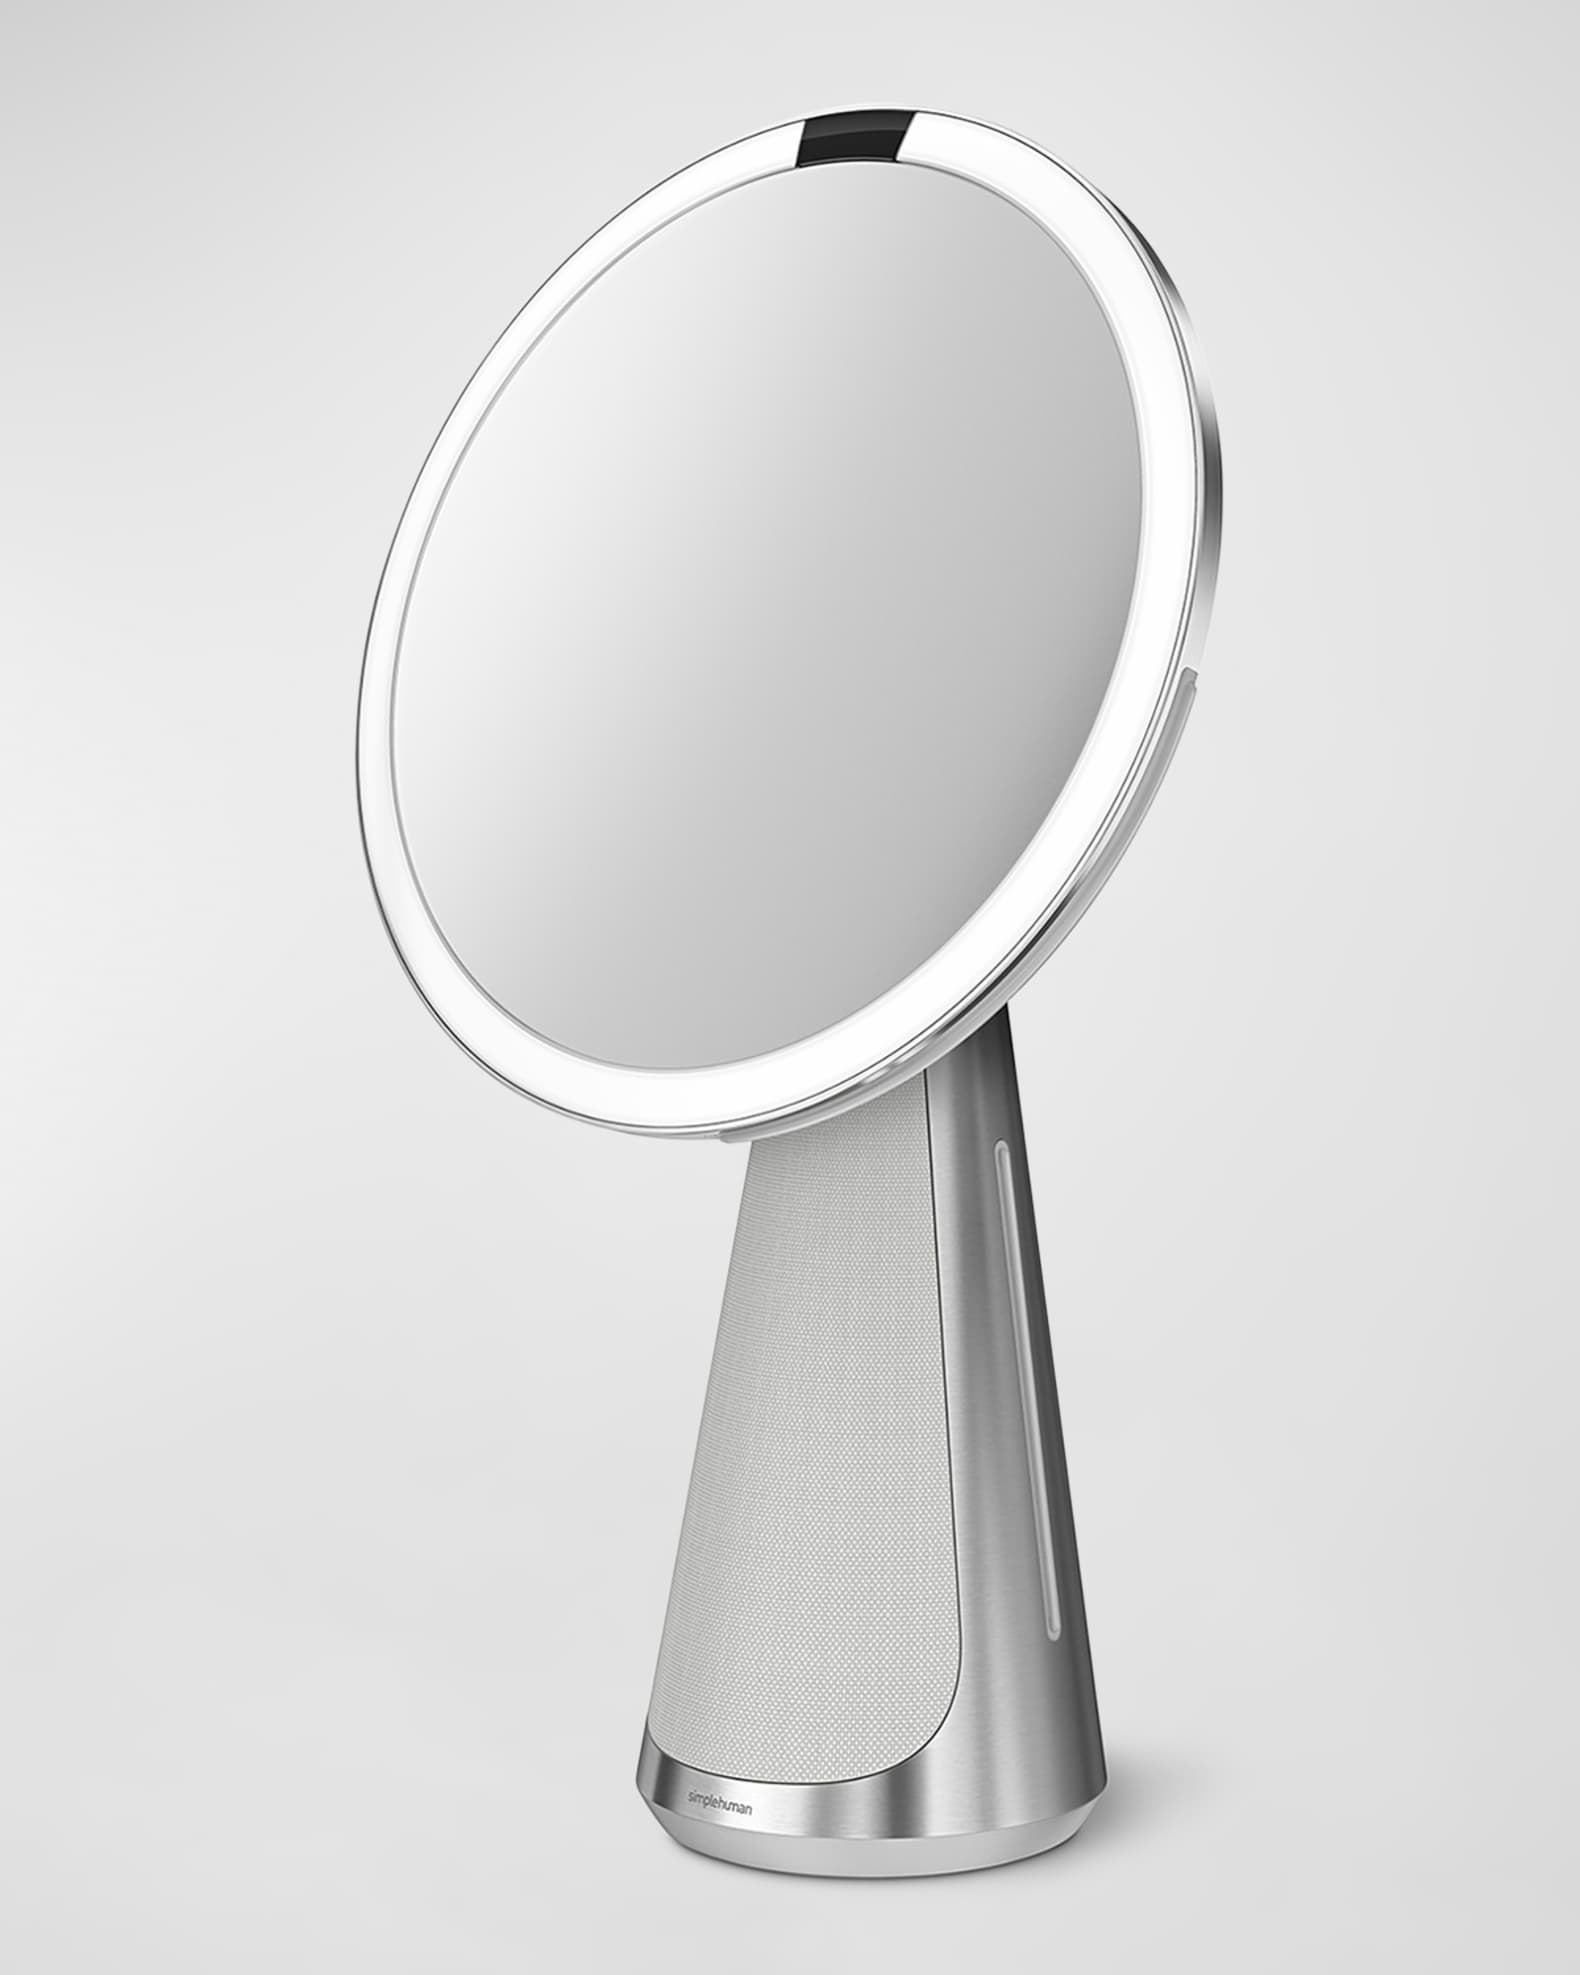 Зеркало simplehuman St -3004 sh. Сенсорное зеркало. Hi Mirror зеркало. Умное зеркало Hi Mirror.